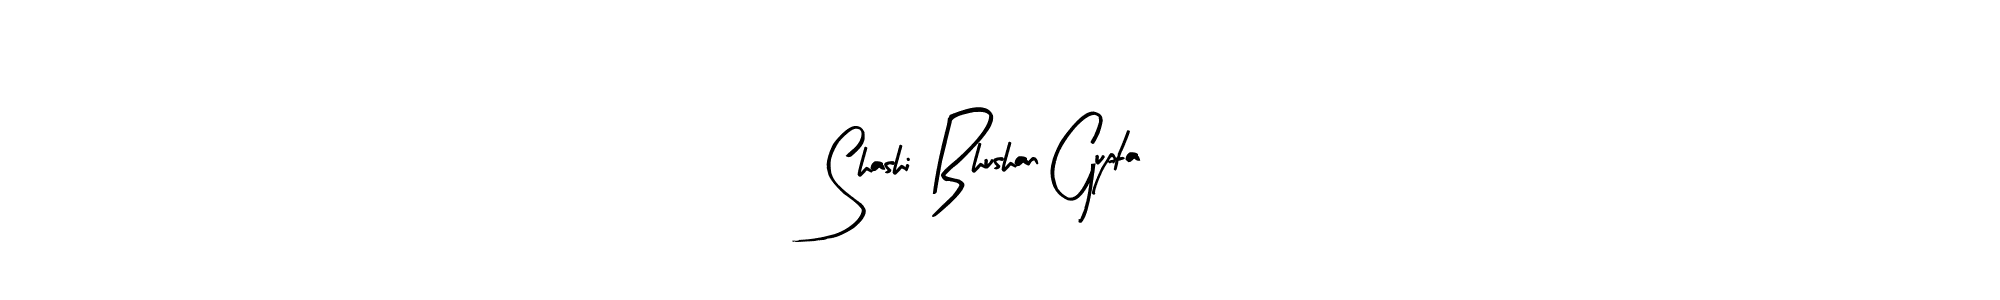 How to Draw Shashi Bhushan Gupta signature style? Arty Signature is a latest design signature styles for name Shashi Bhushan Gupta. Shashi Bhushan Gupta signature style 8 images and pictures png